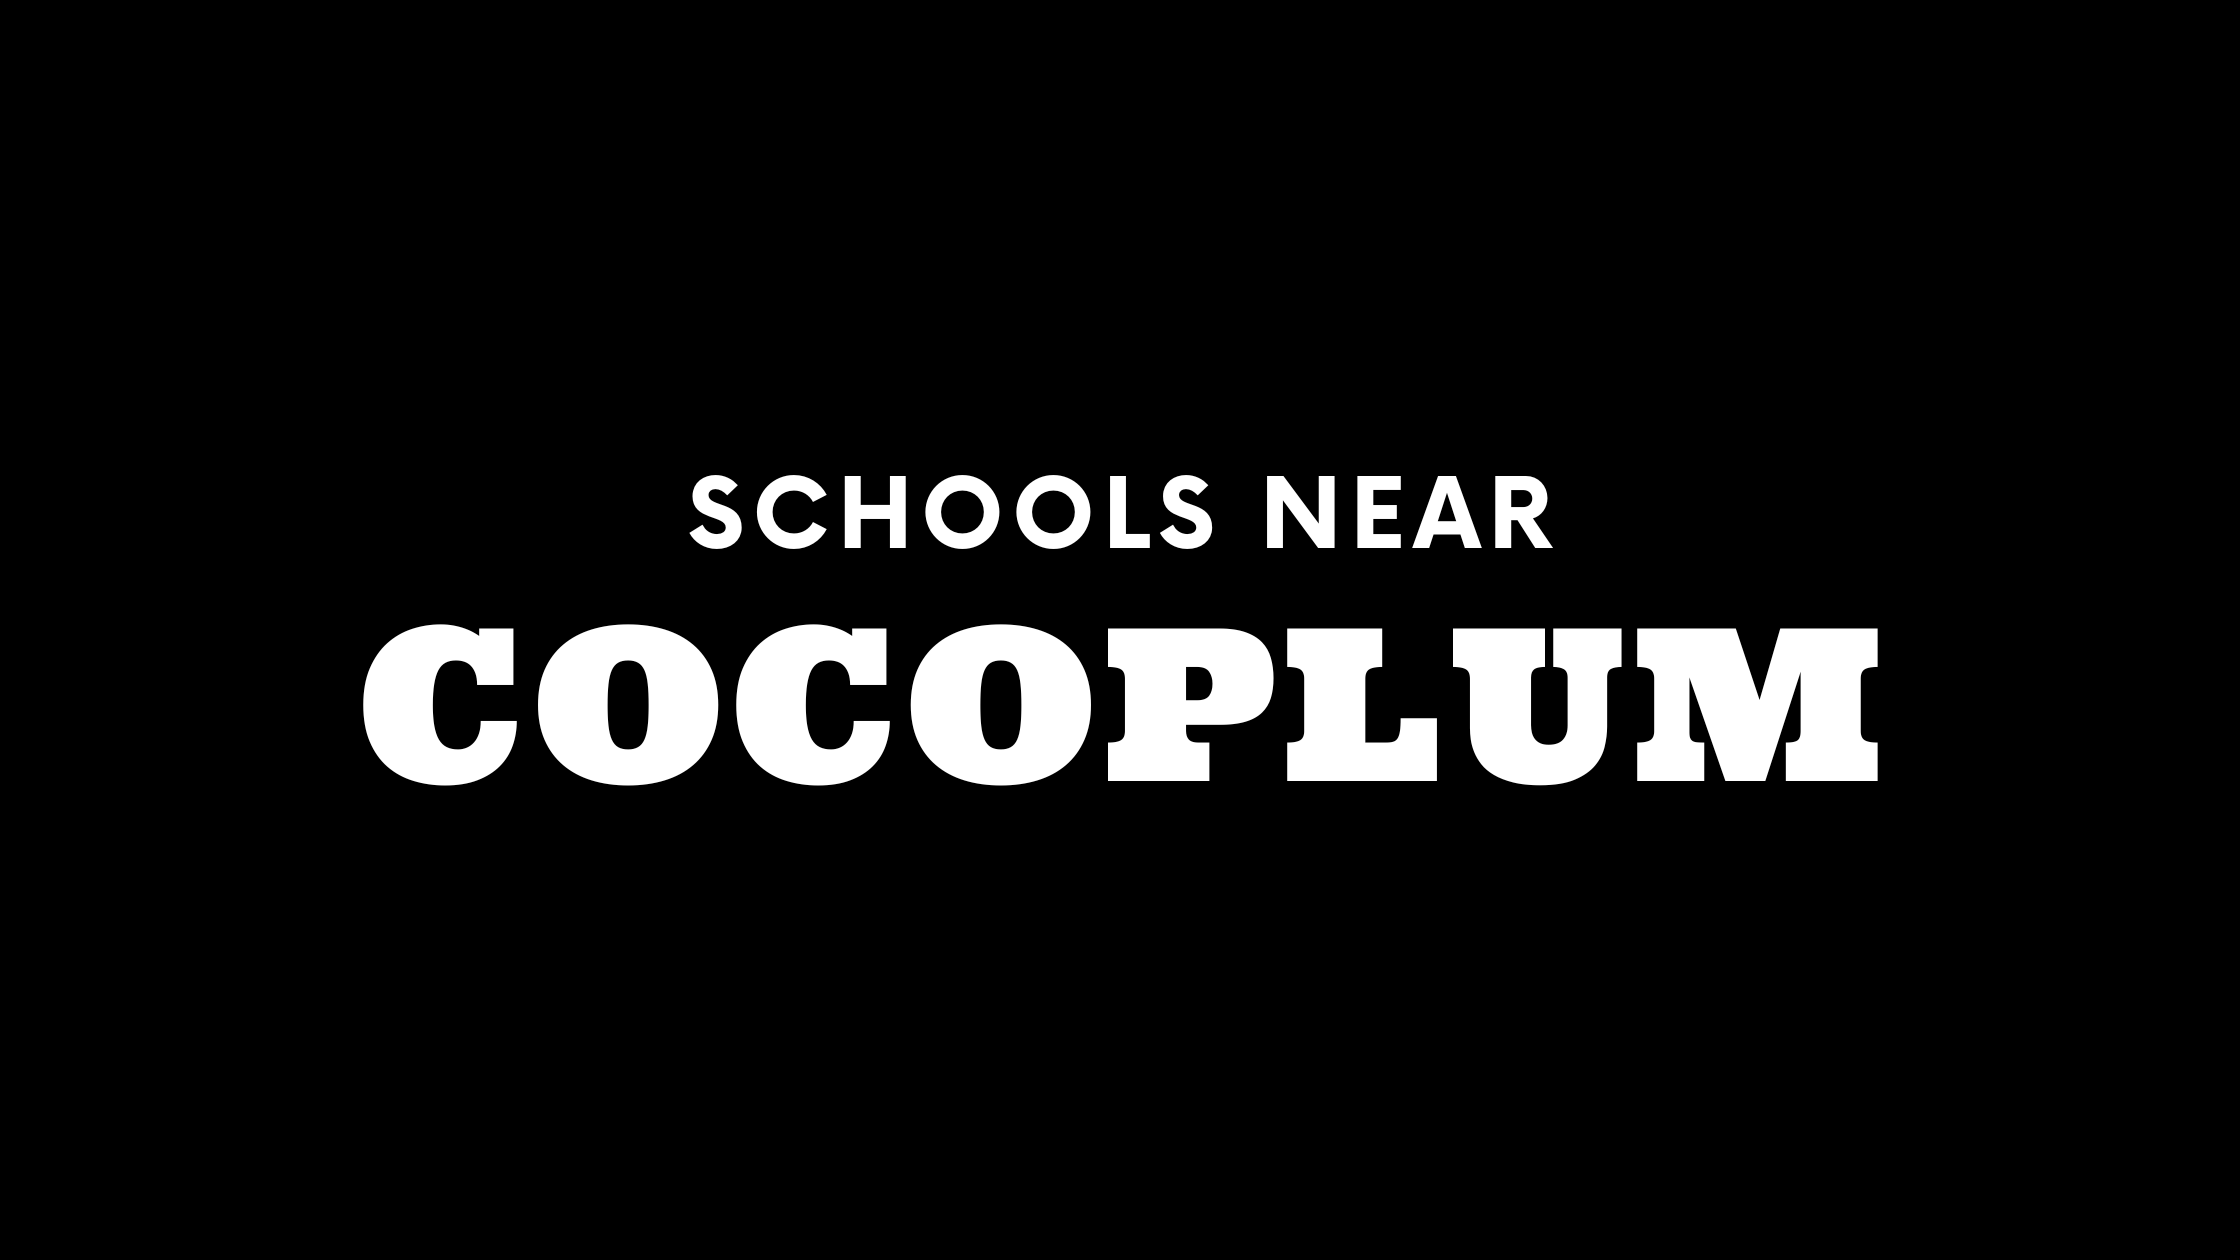 Schools near Cocoplum